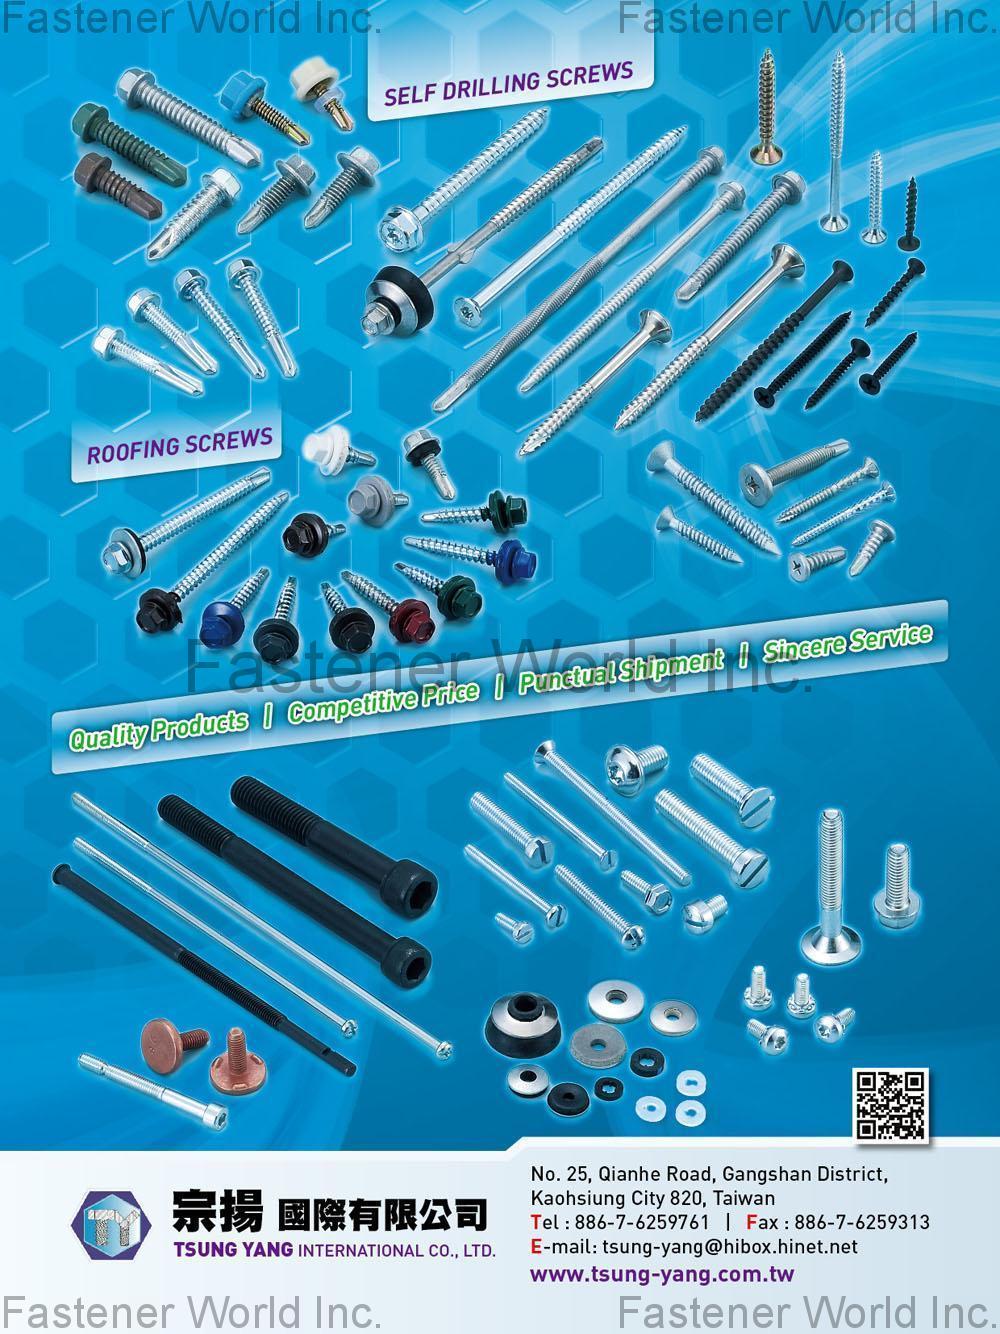 TSUNG YANG INTERNATIONAL CO., LTD. , Self Drilling Screws, Roofing Screws, Nuts, Bolts, Washers , Self-drilling Screws